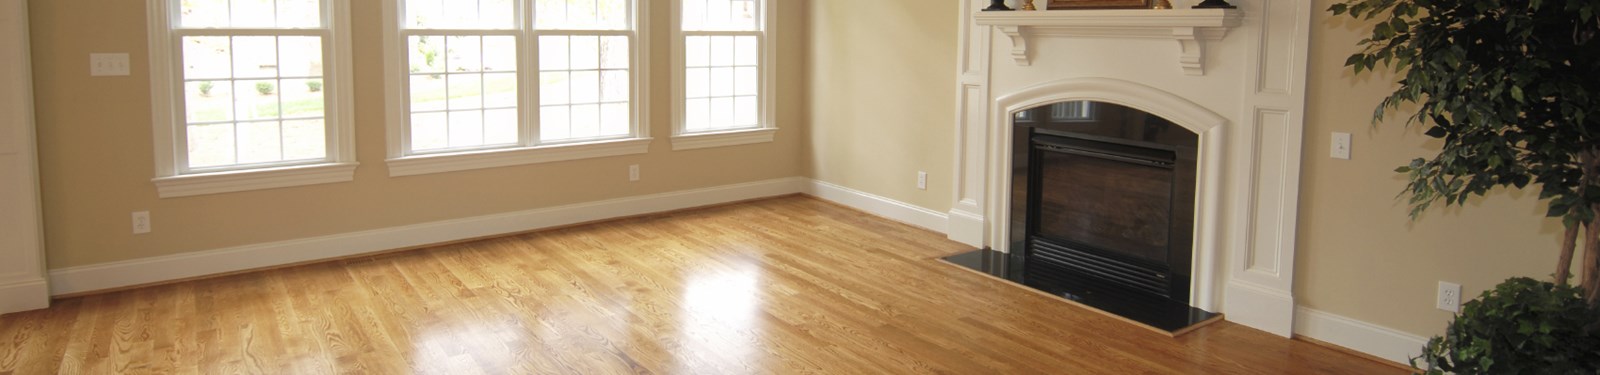 hardwood floor in finished room